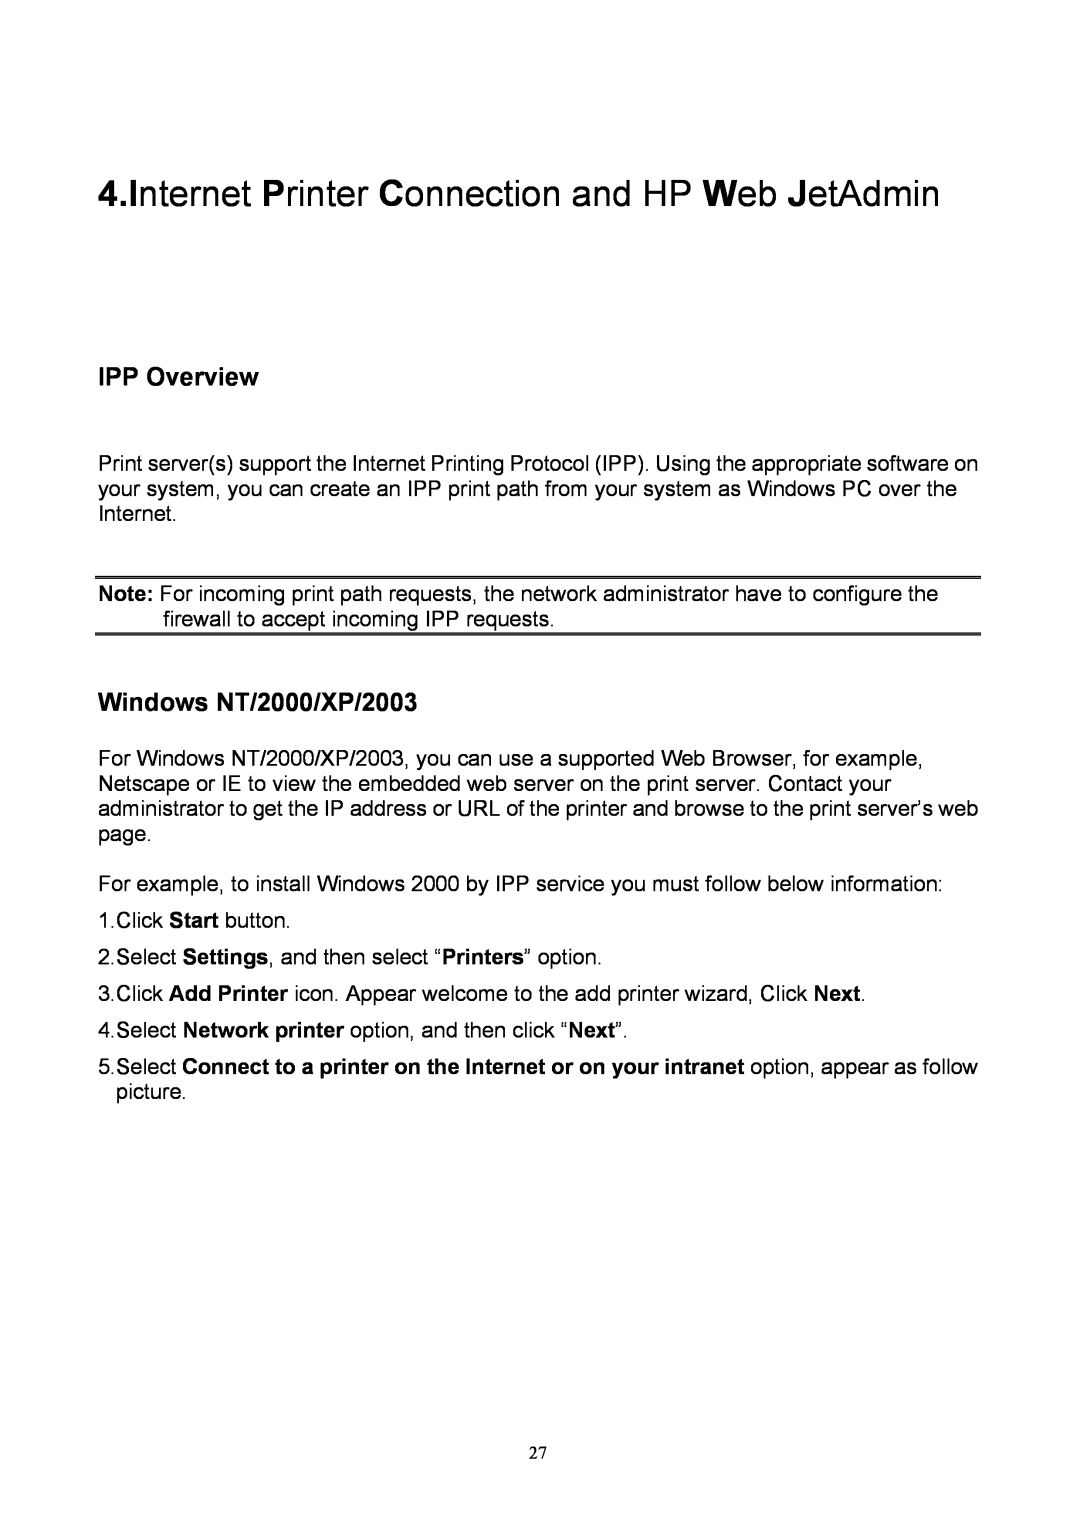 TRENDnet TEW-P1P, TEW-P1U manual IPP Overview, Windows NT/2000/XP/2003, Internet Printer Connection and HP Web JetAdmin 